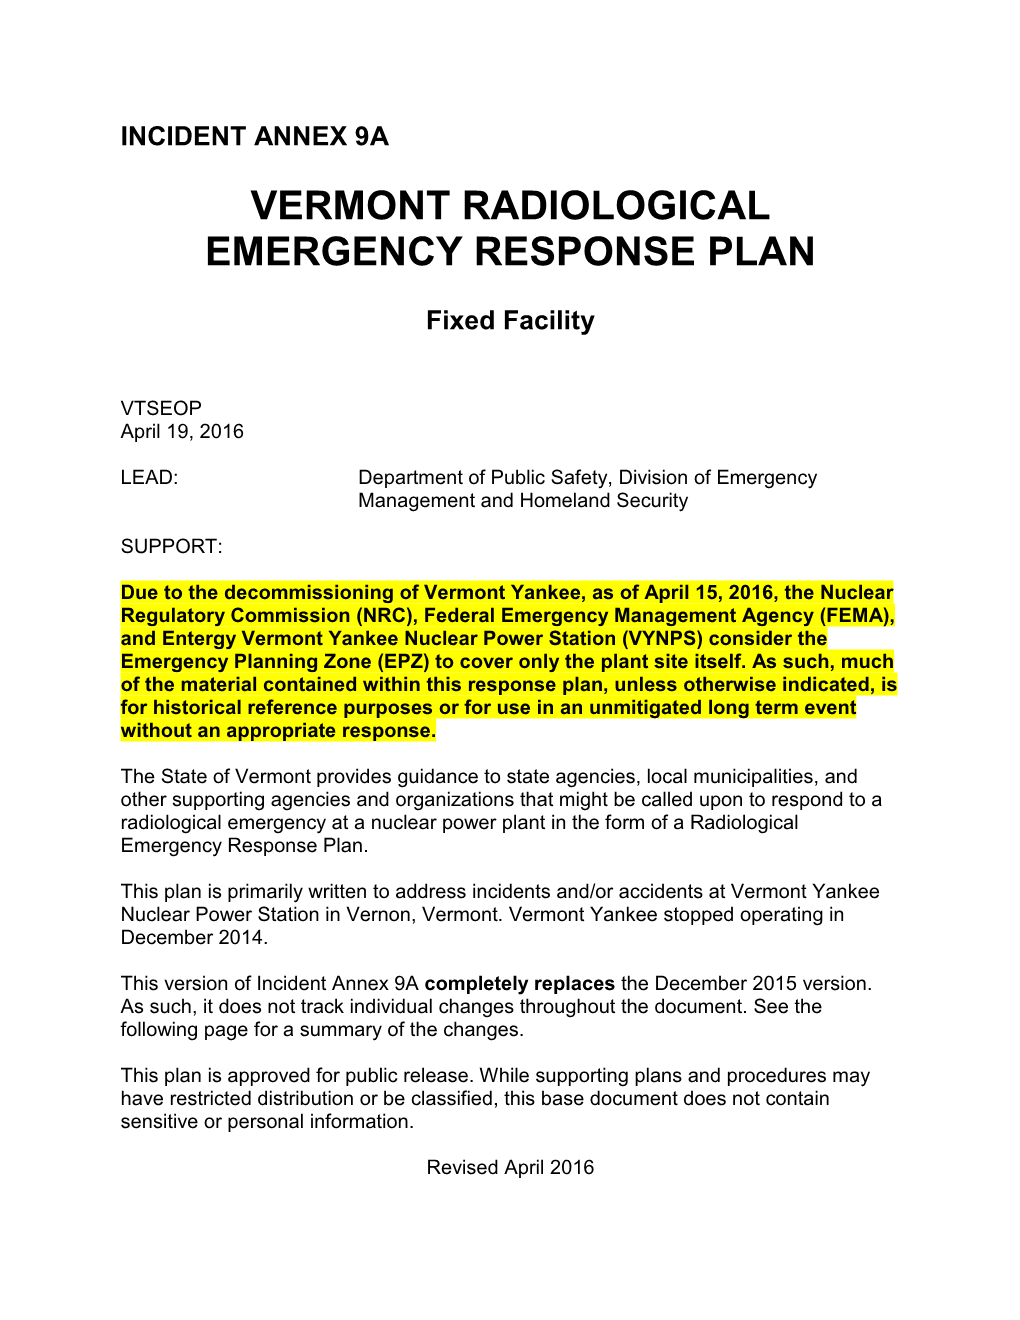 Vermont Radiological Emergency Response Plan